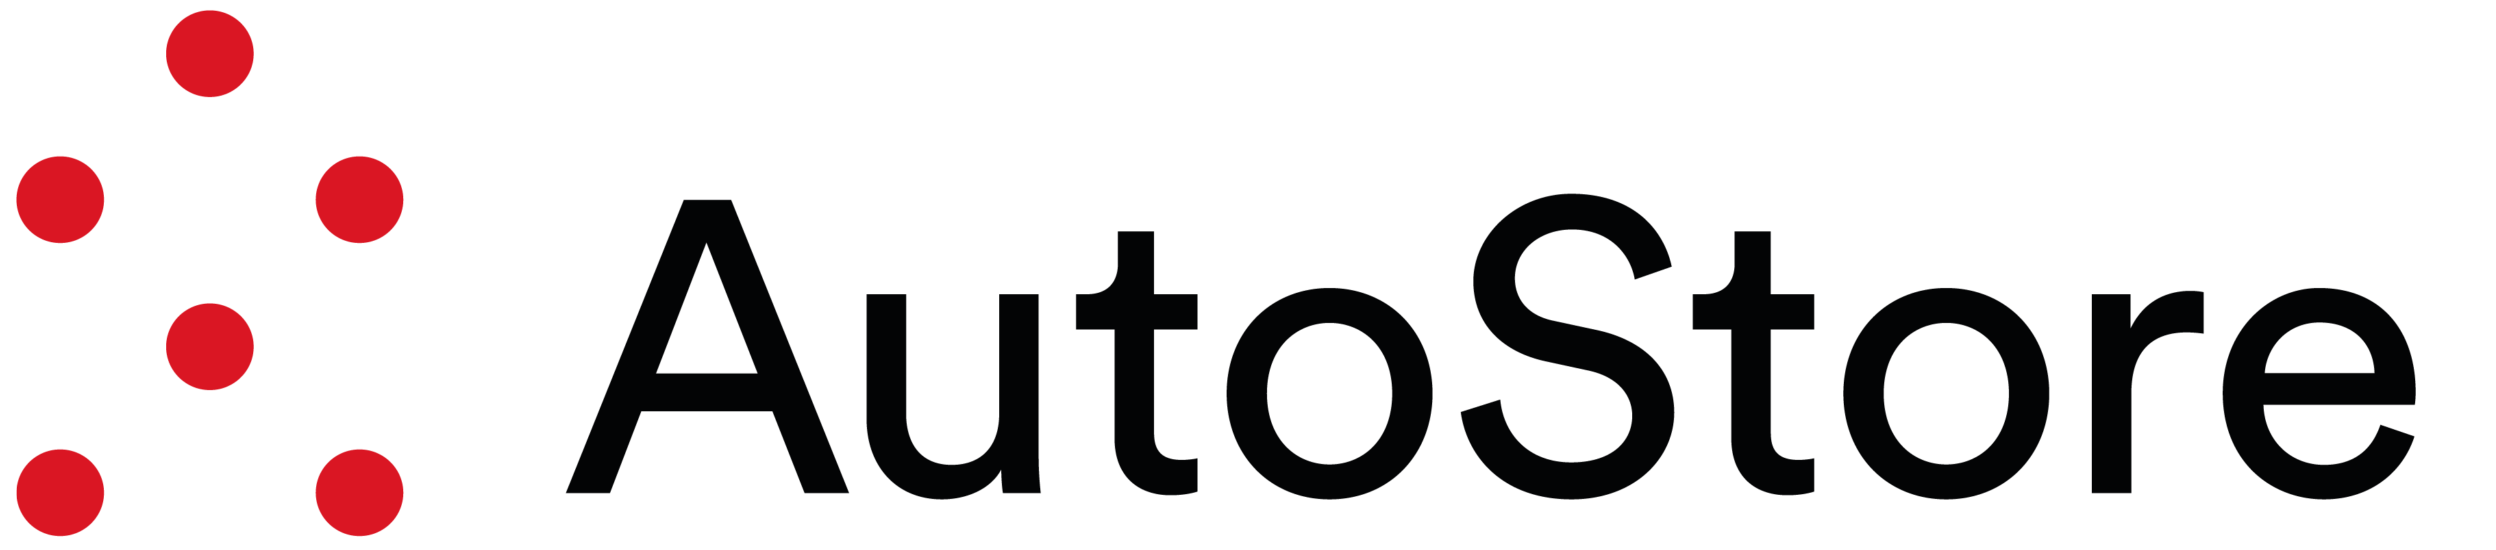 Autostore logo